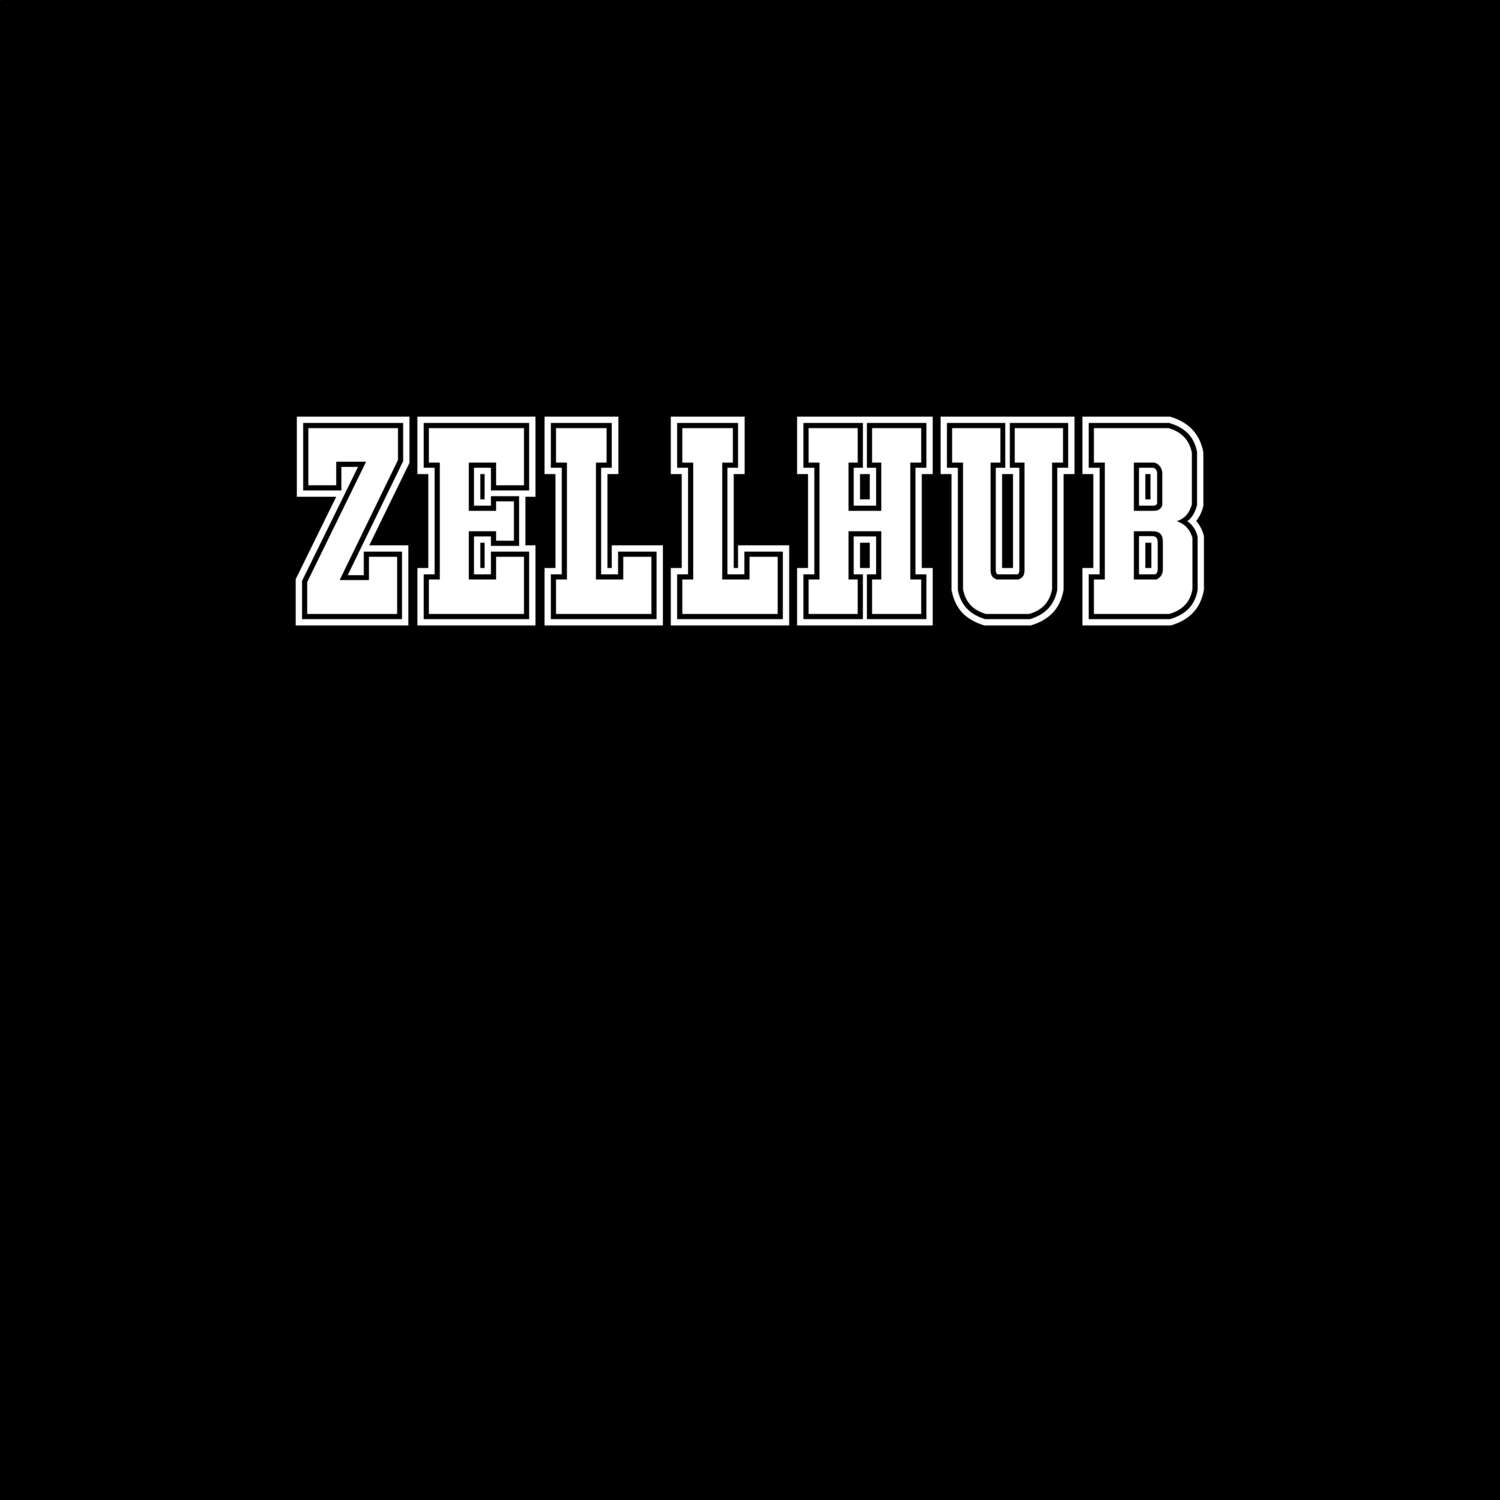 Zellhub T-Shirt »Classic«